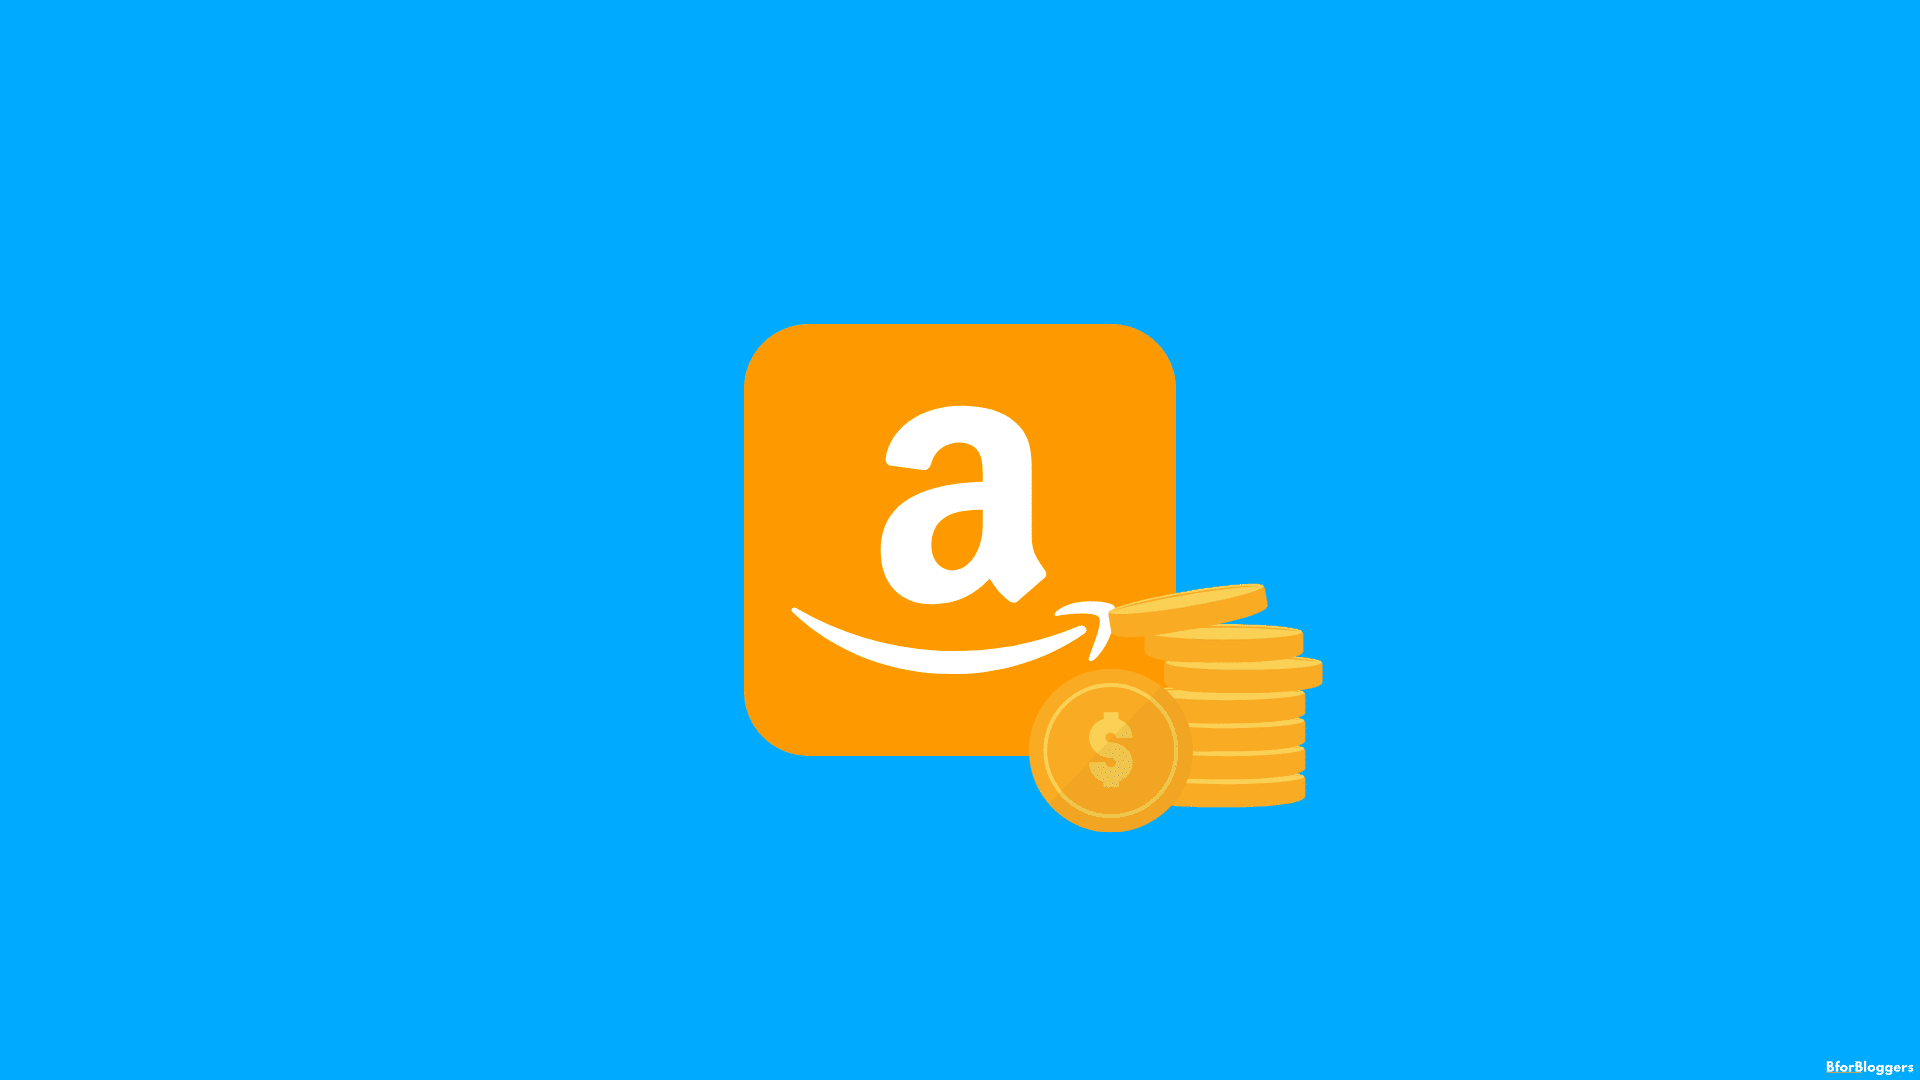 6 Amazon Affiliate Marketing Tactics to Make More Money